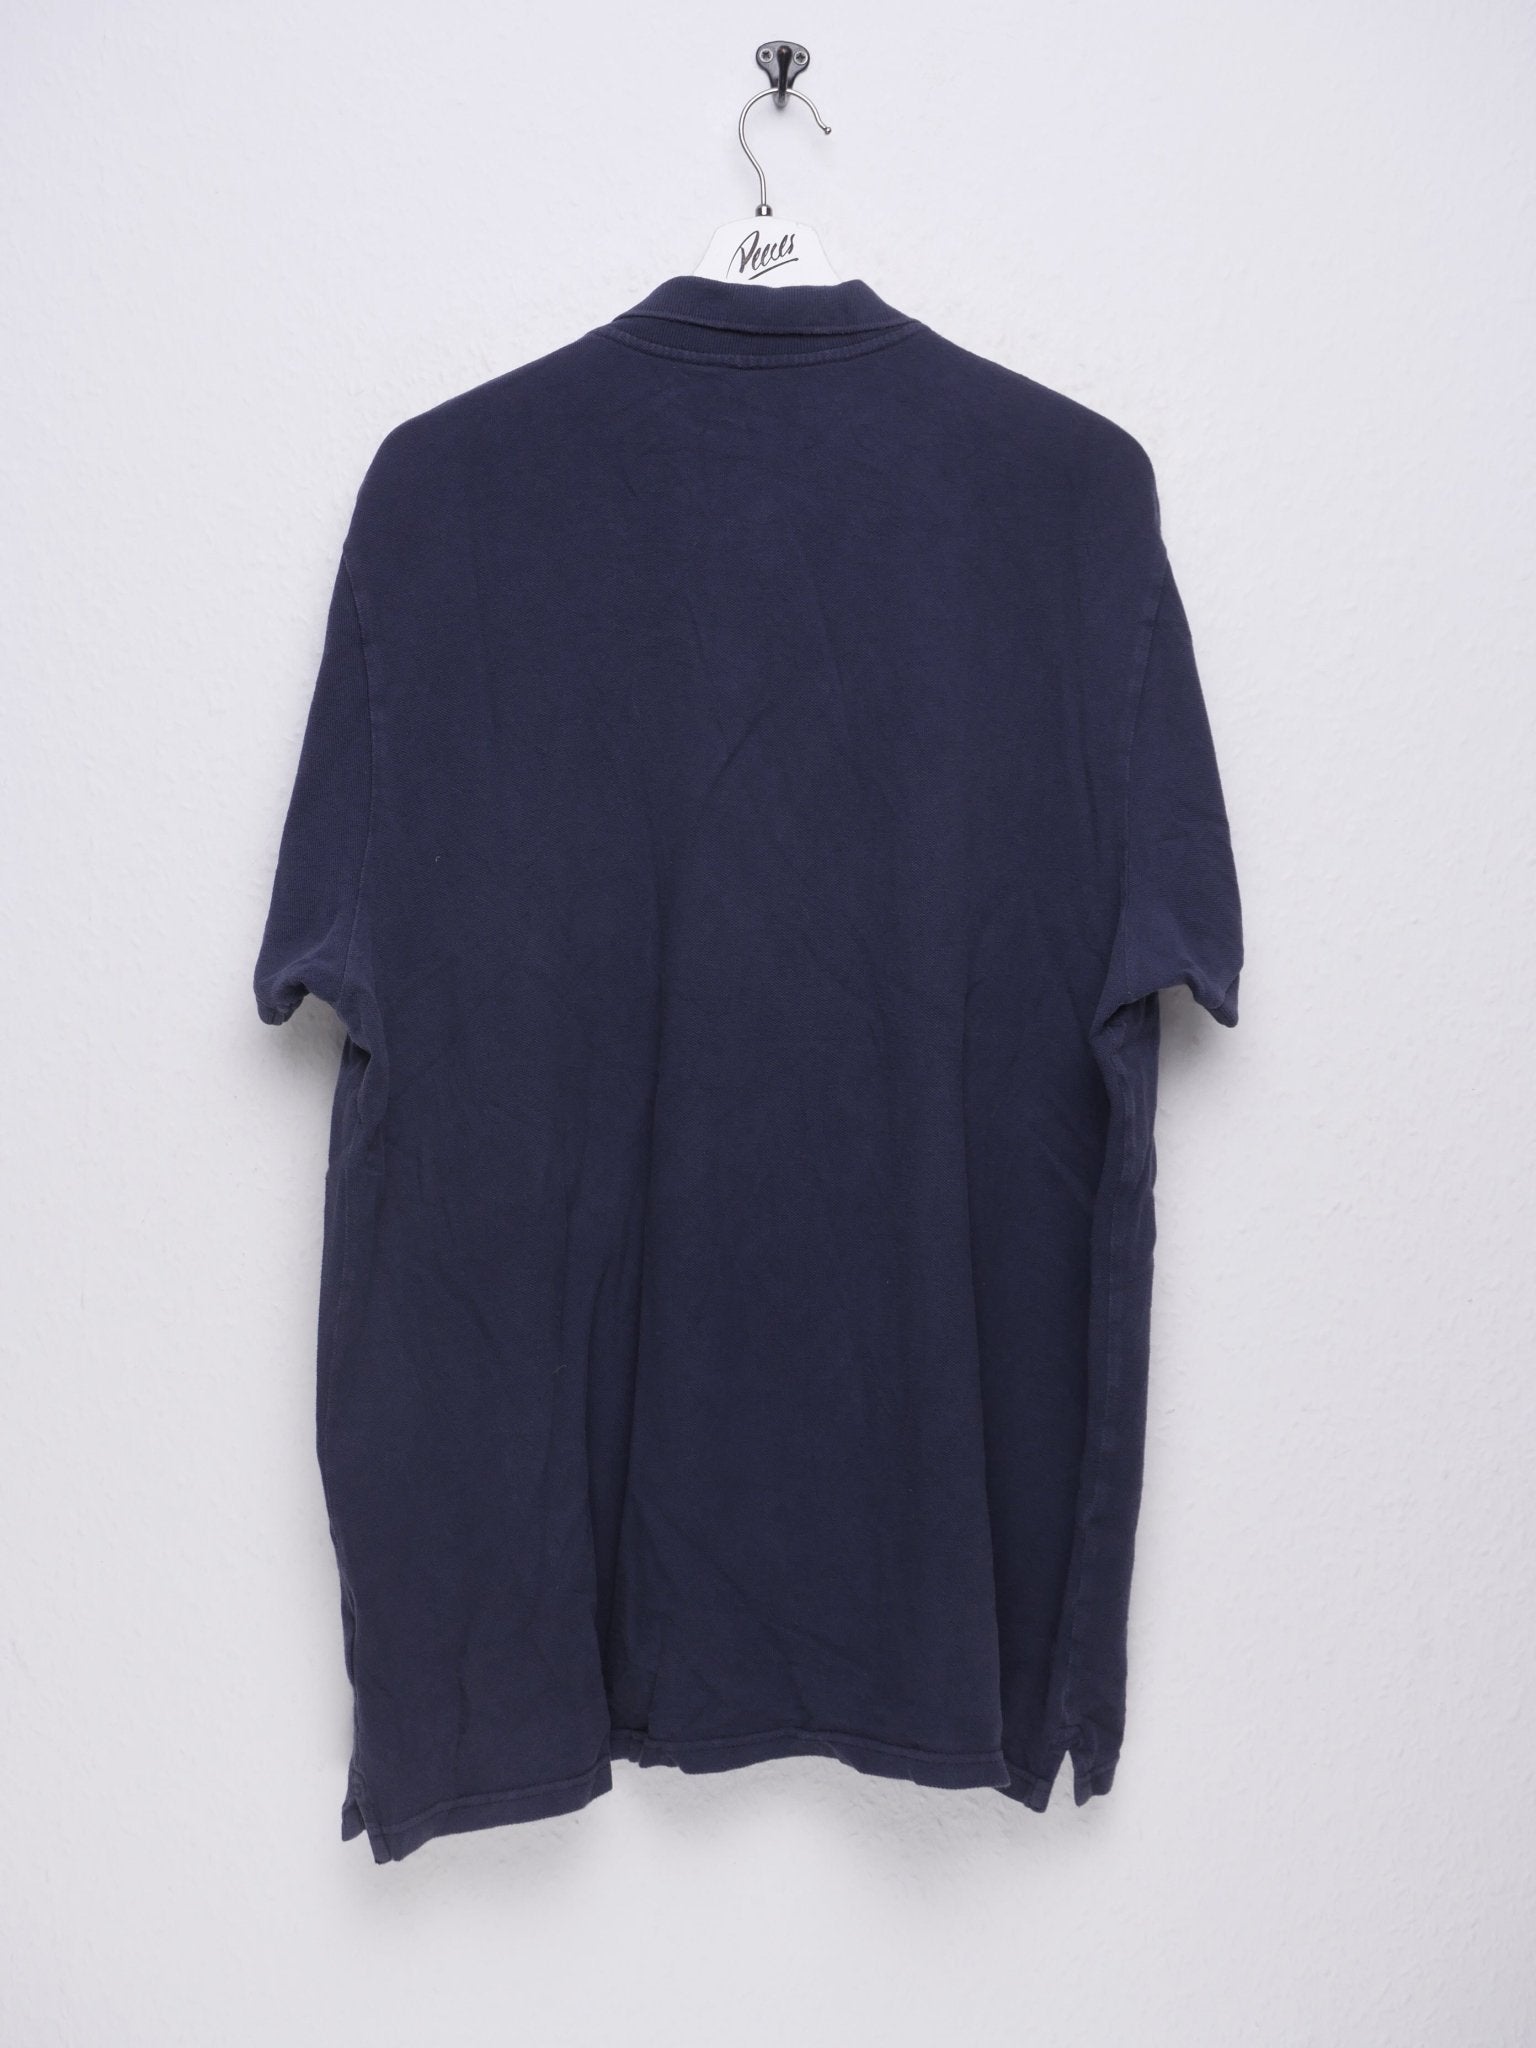 Vintage blue basic Polo Shirt - Peeces